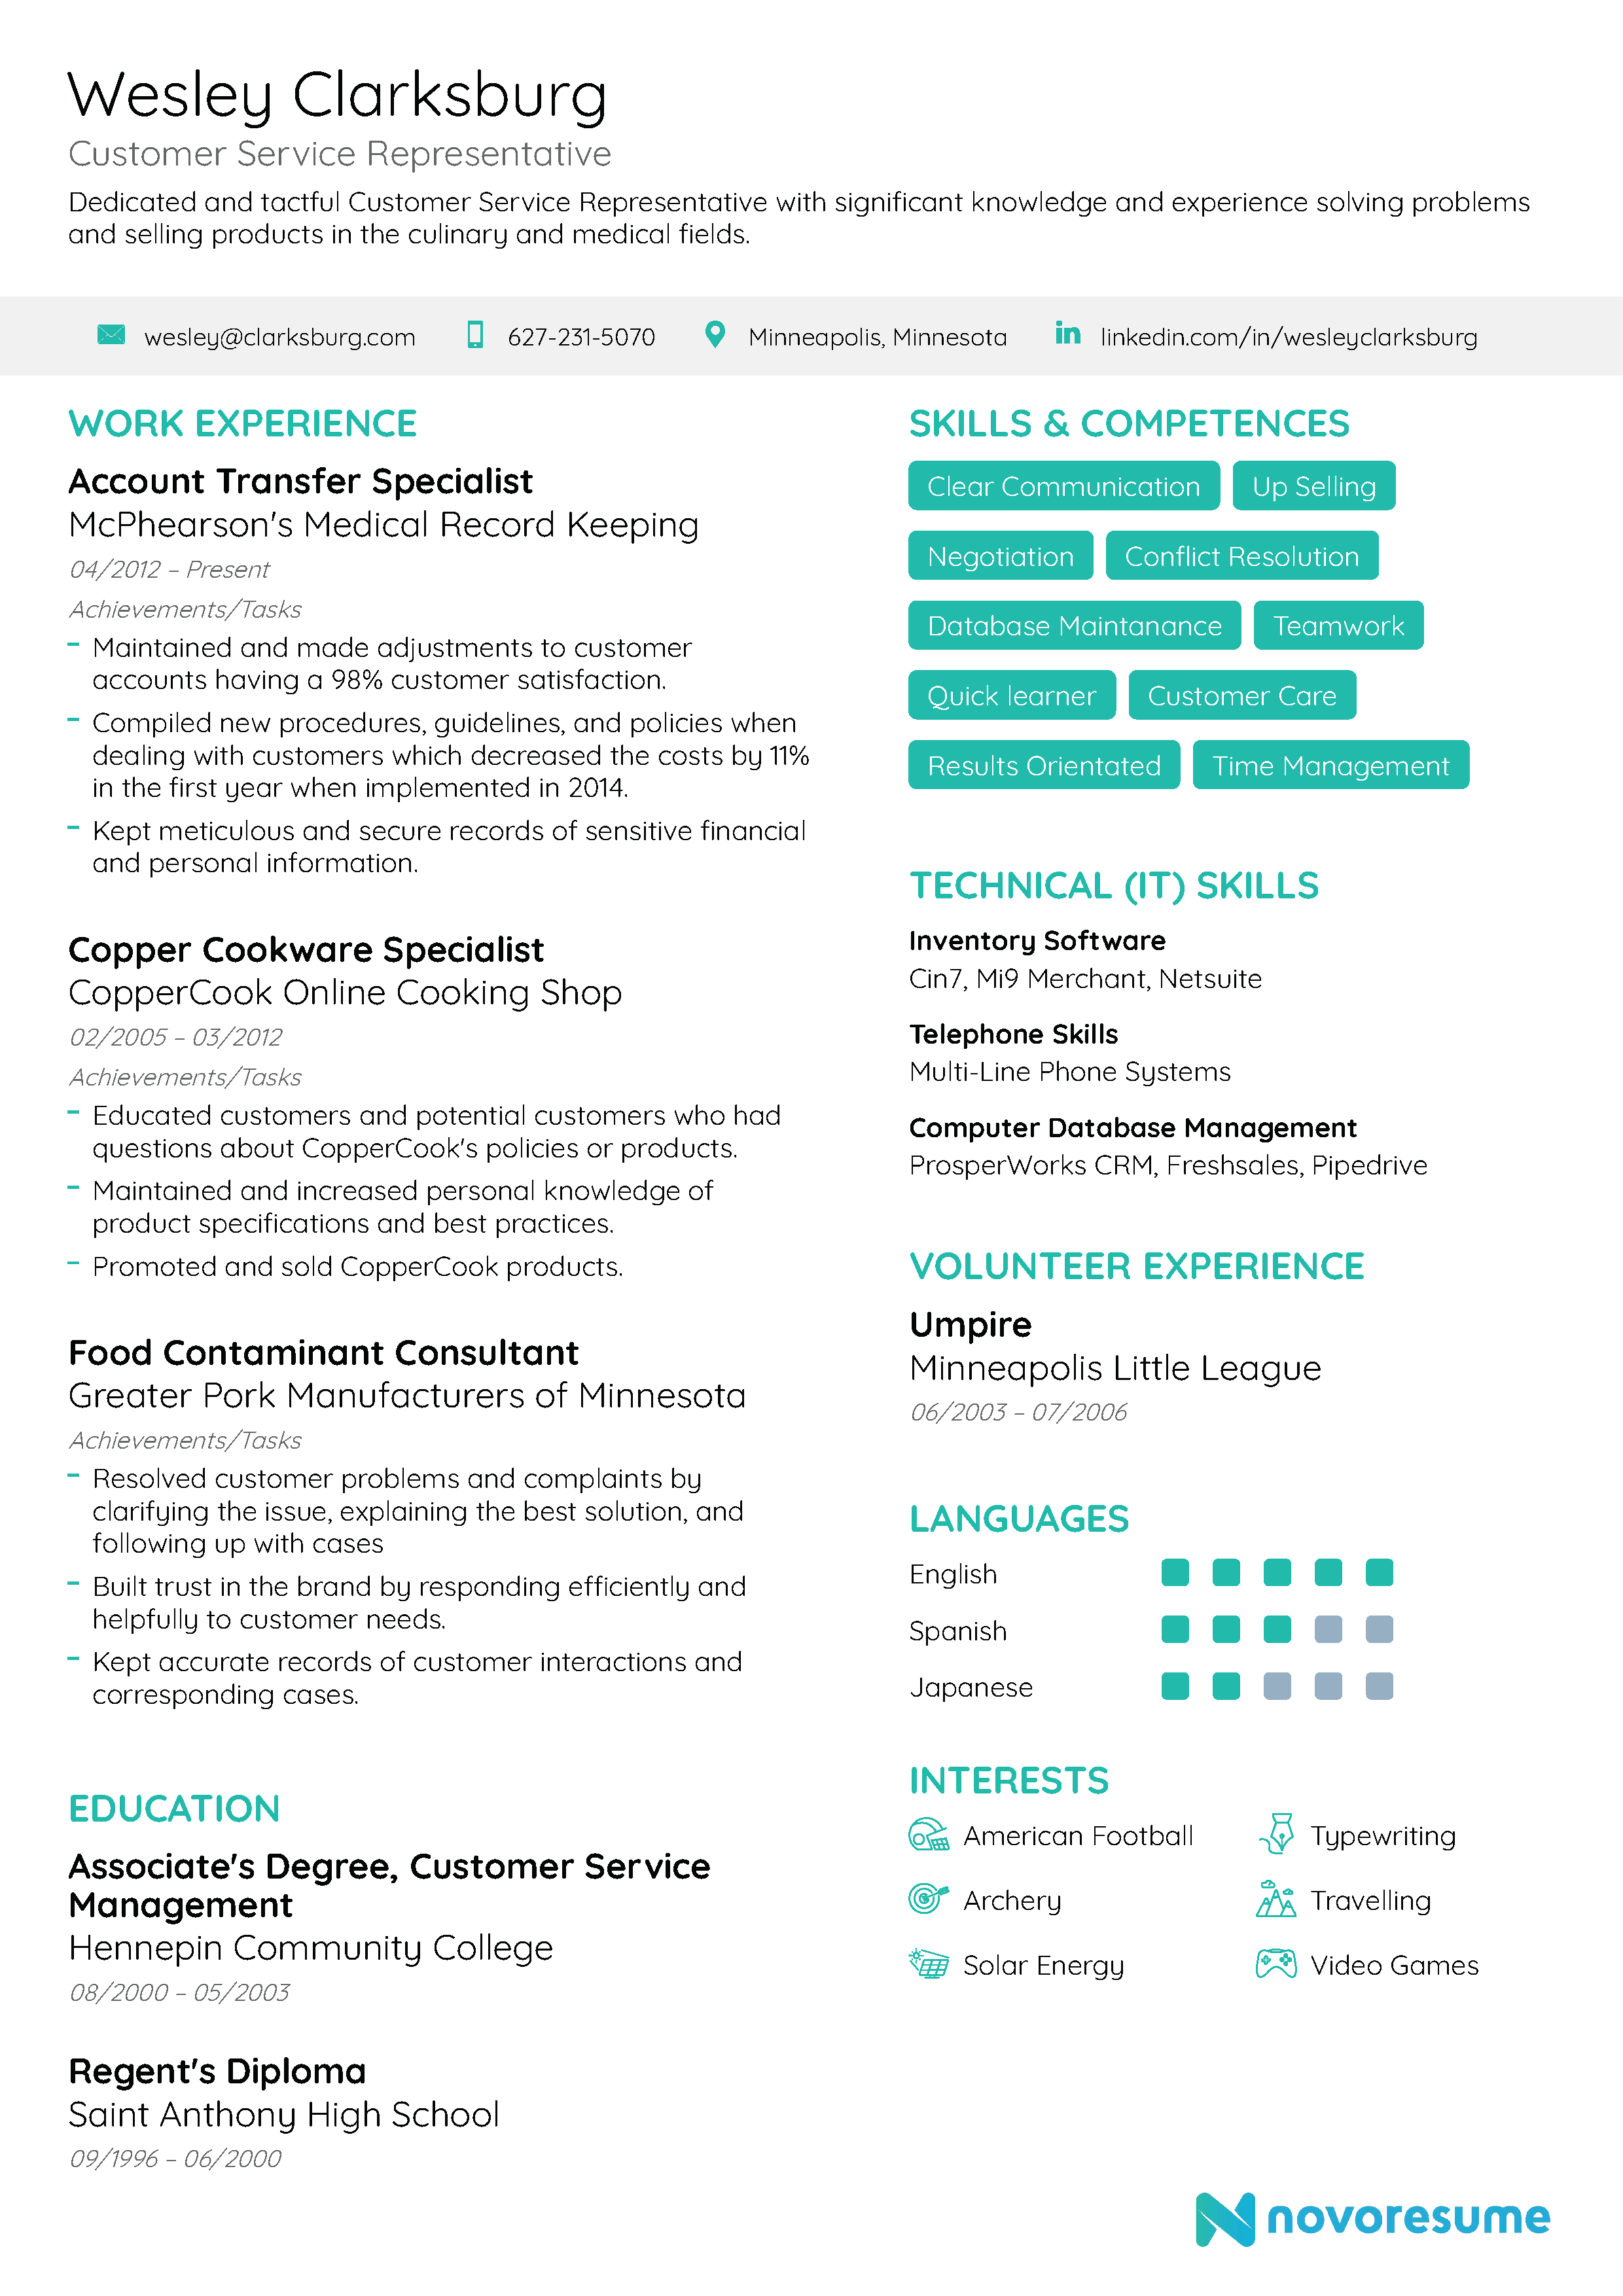 Customer Service Resume Skills Customer Service Resume customer service resume skills|wikiresume.com